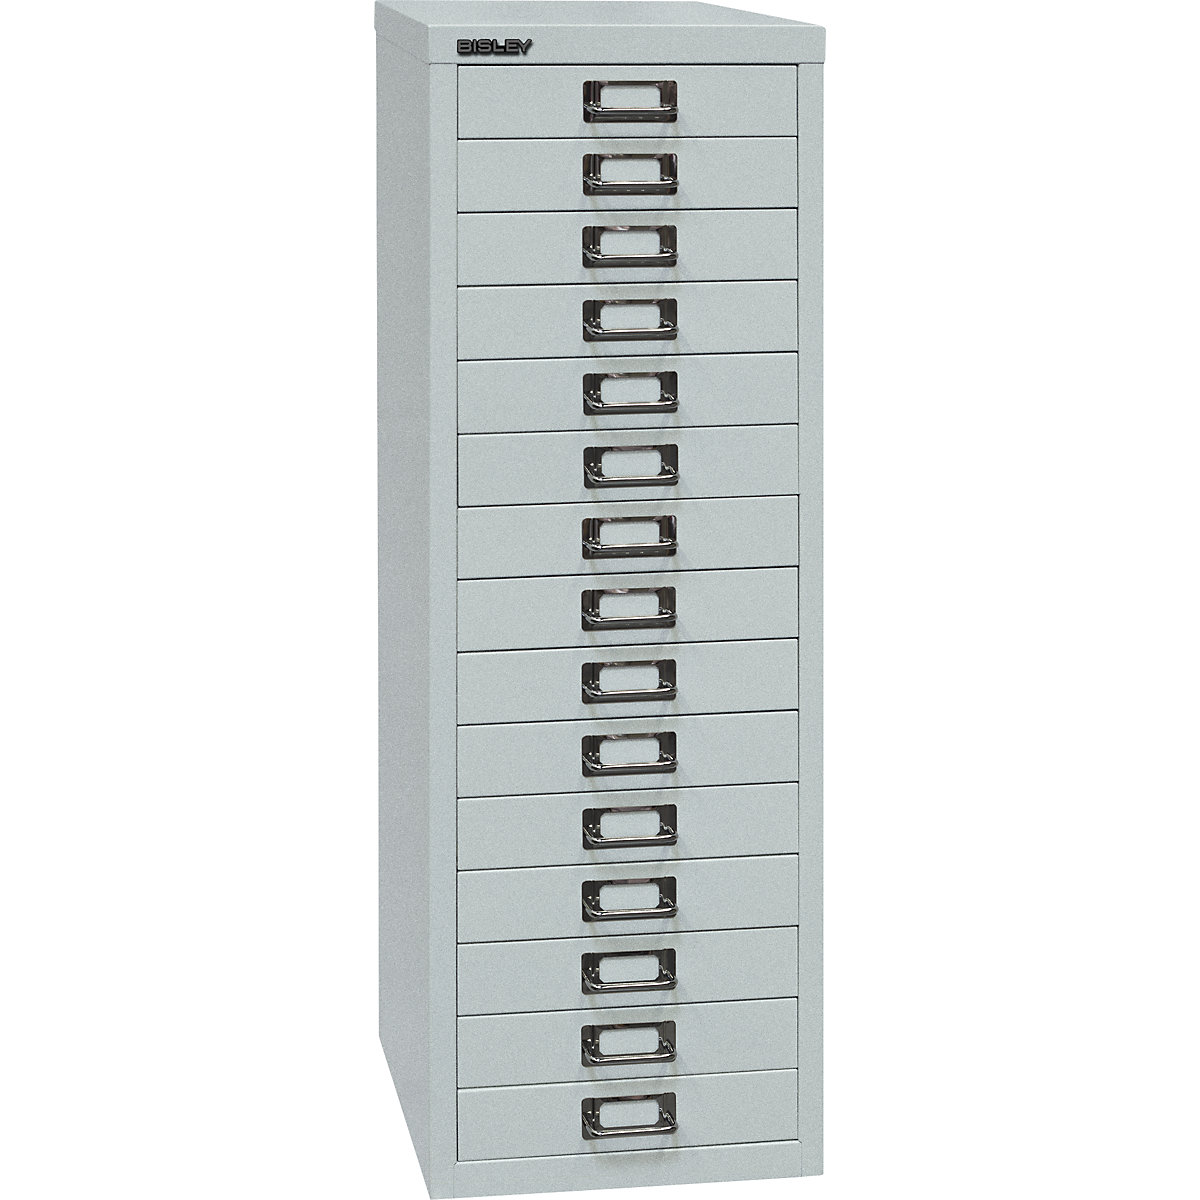 MultiDrawer™ 39 series – BISLEY, A4, 15 drawers, silver-6